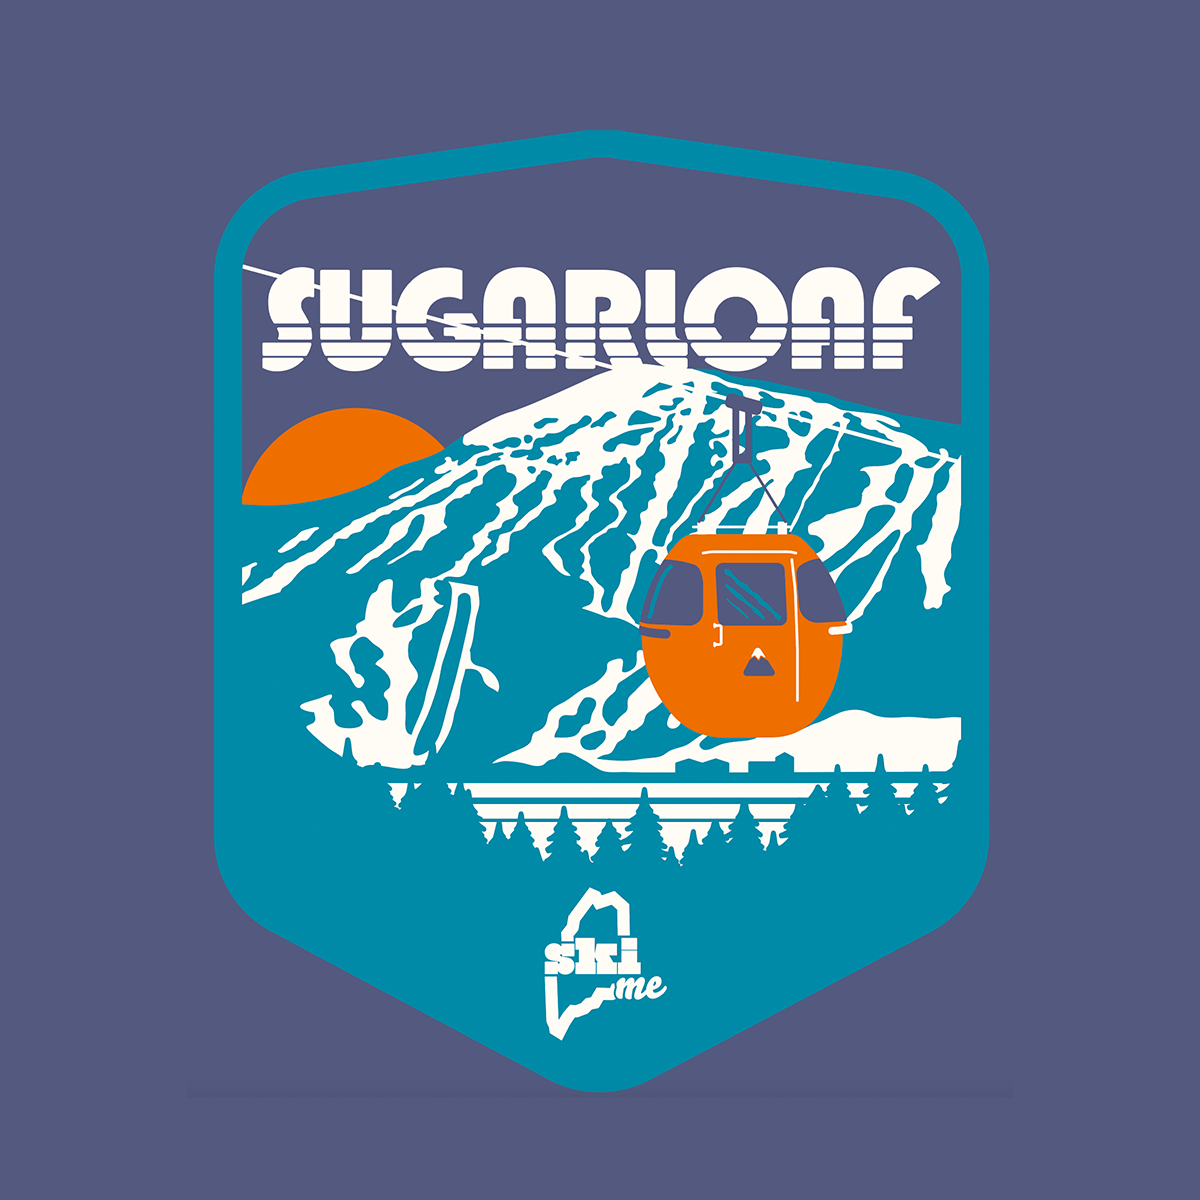 Live Maine Sugarloaf T-shirt